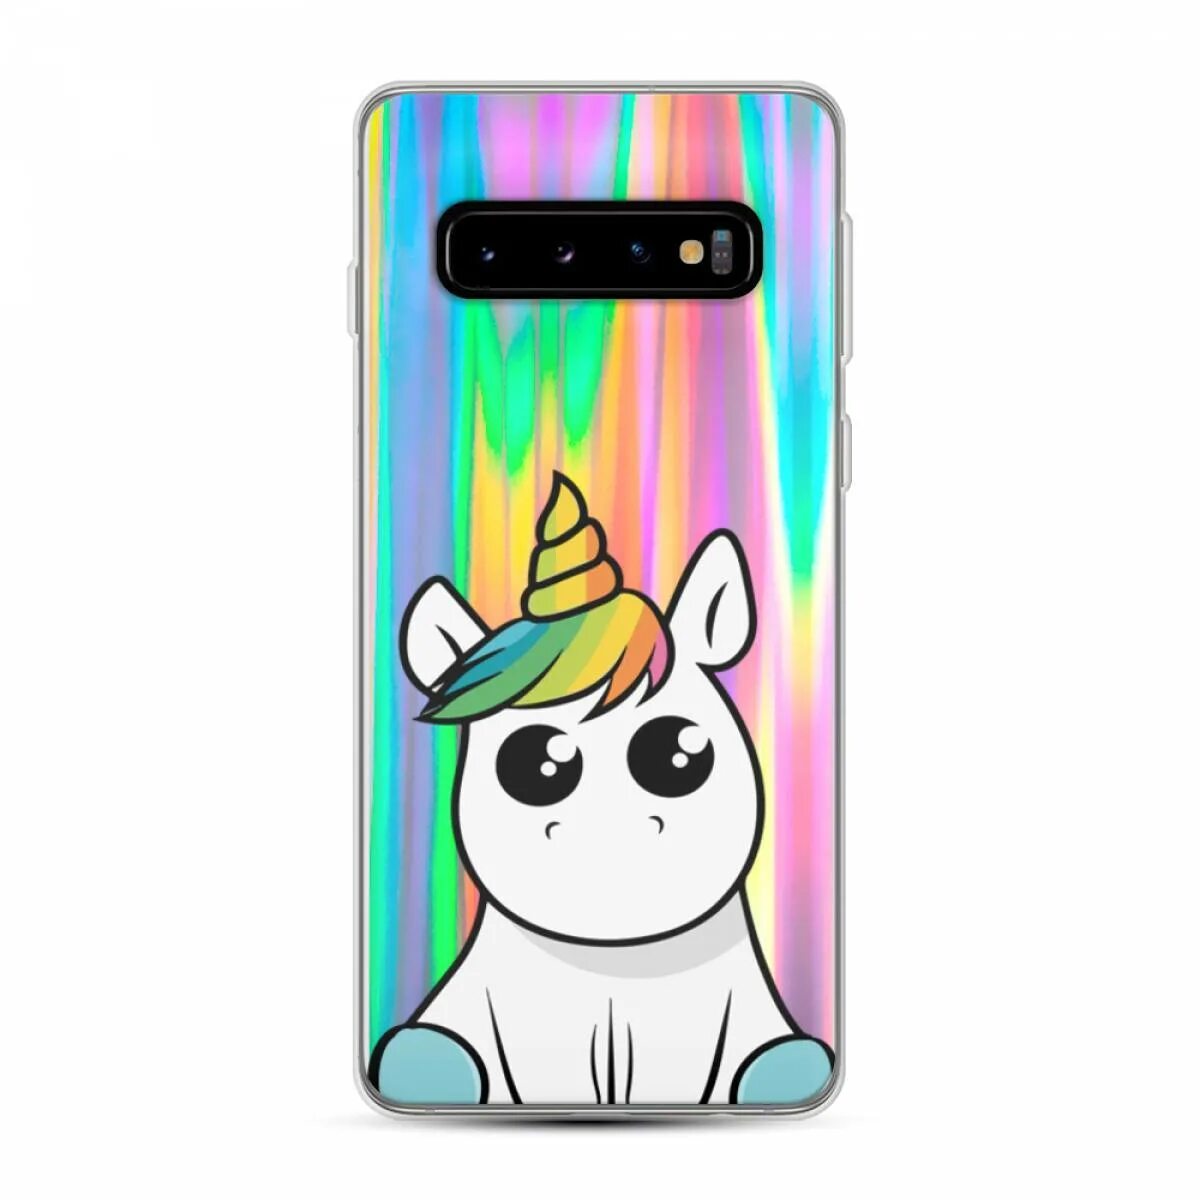 Unicorn phone #1